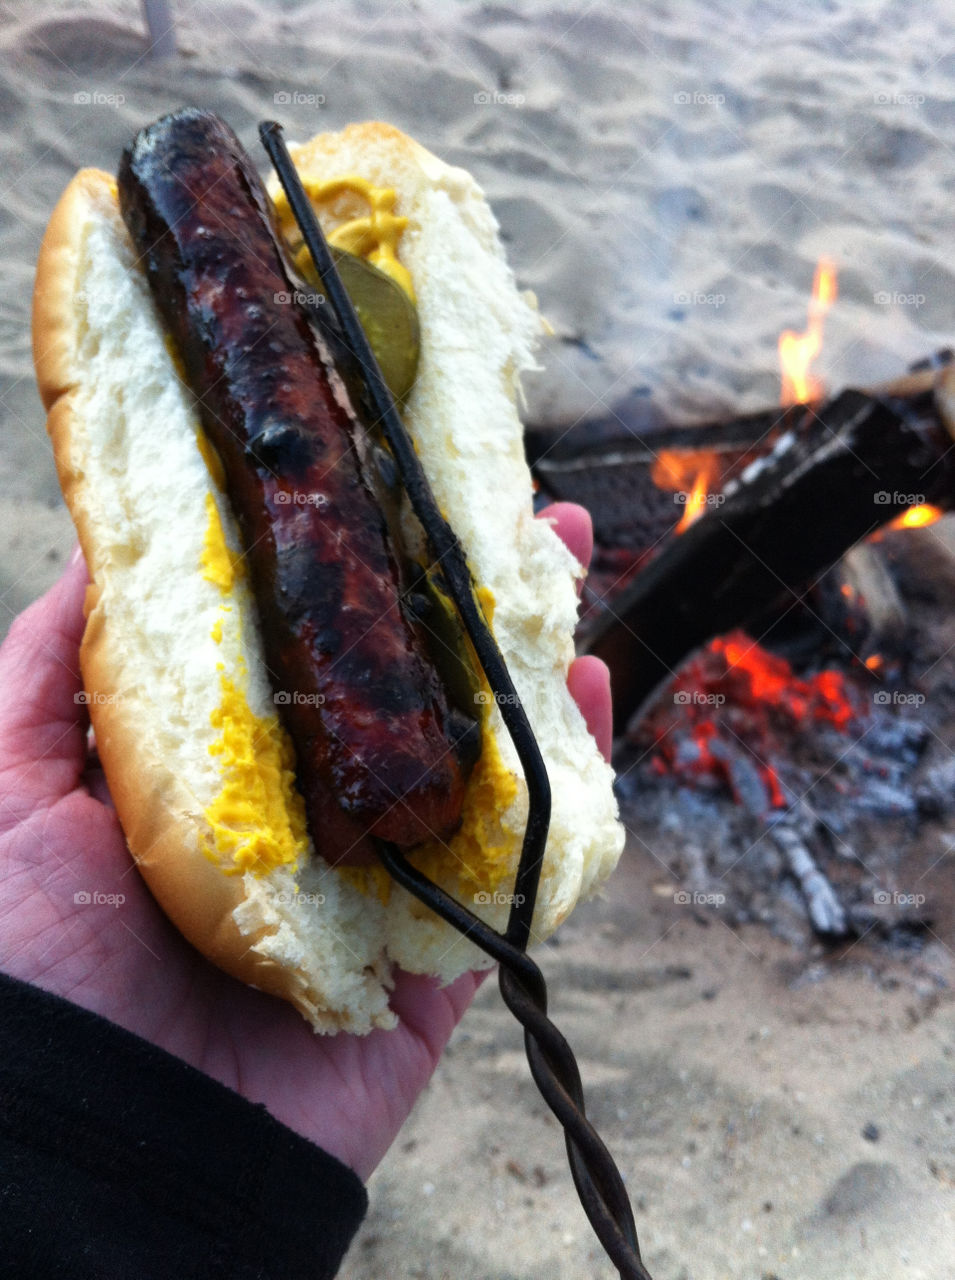 italy hot dog campfire by patsyjk